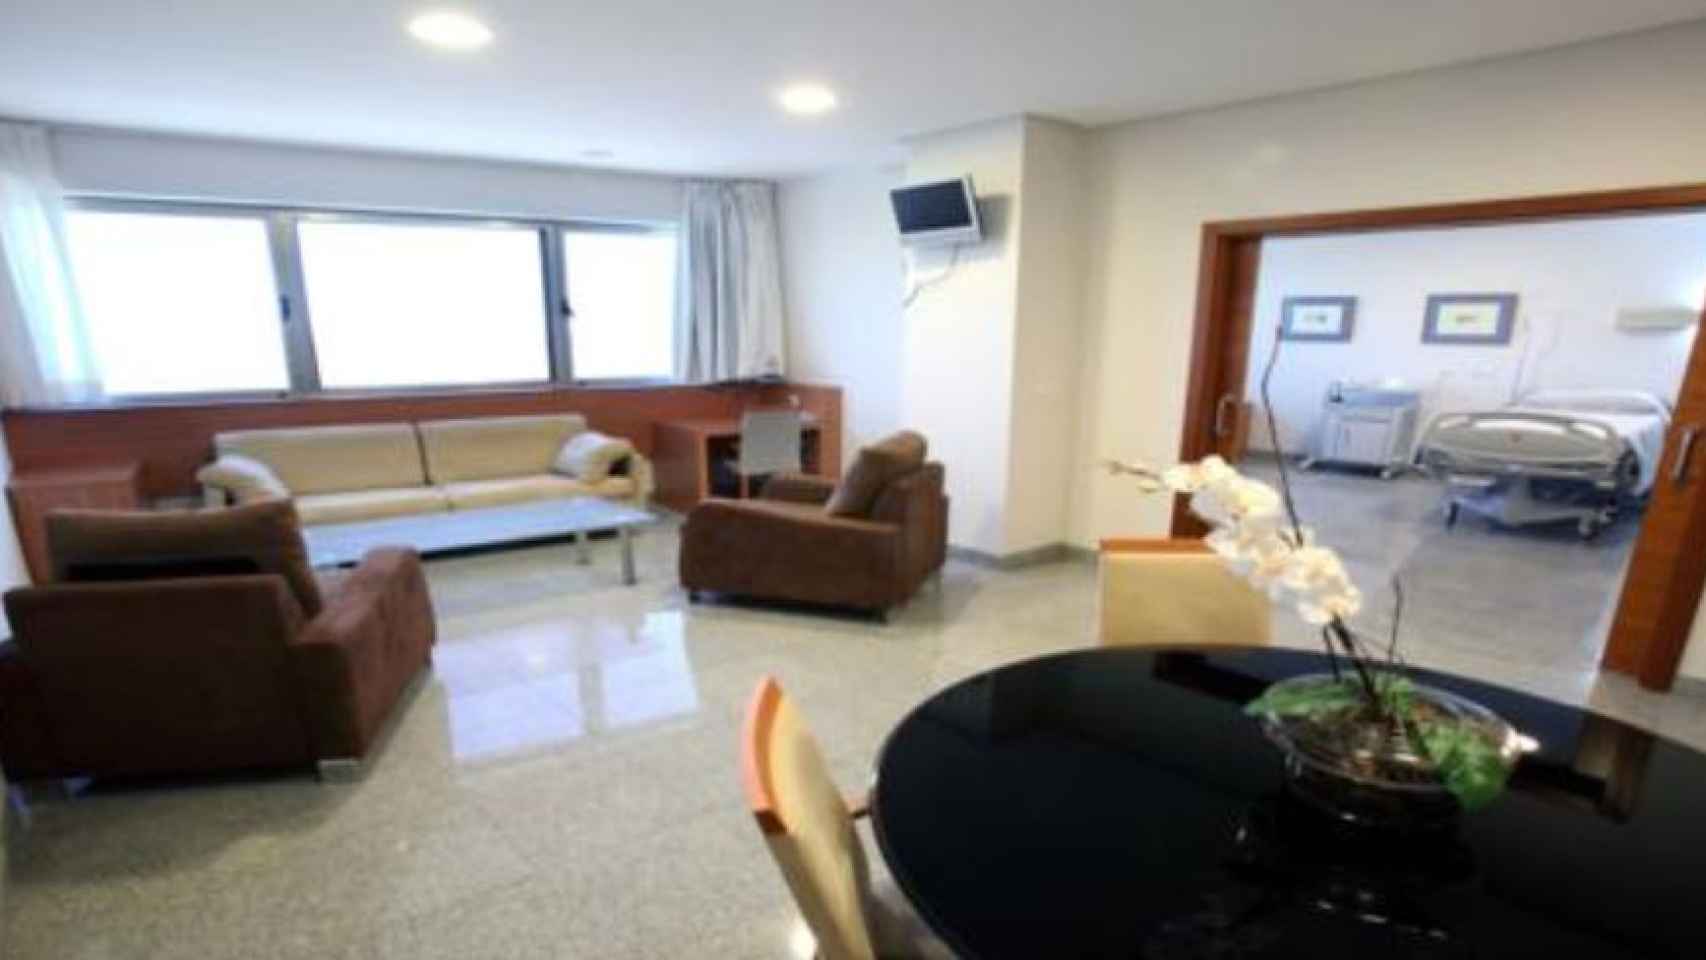 Detalle de la sala de estar de la suite del hospital Vithas Nisa Sevilla.